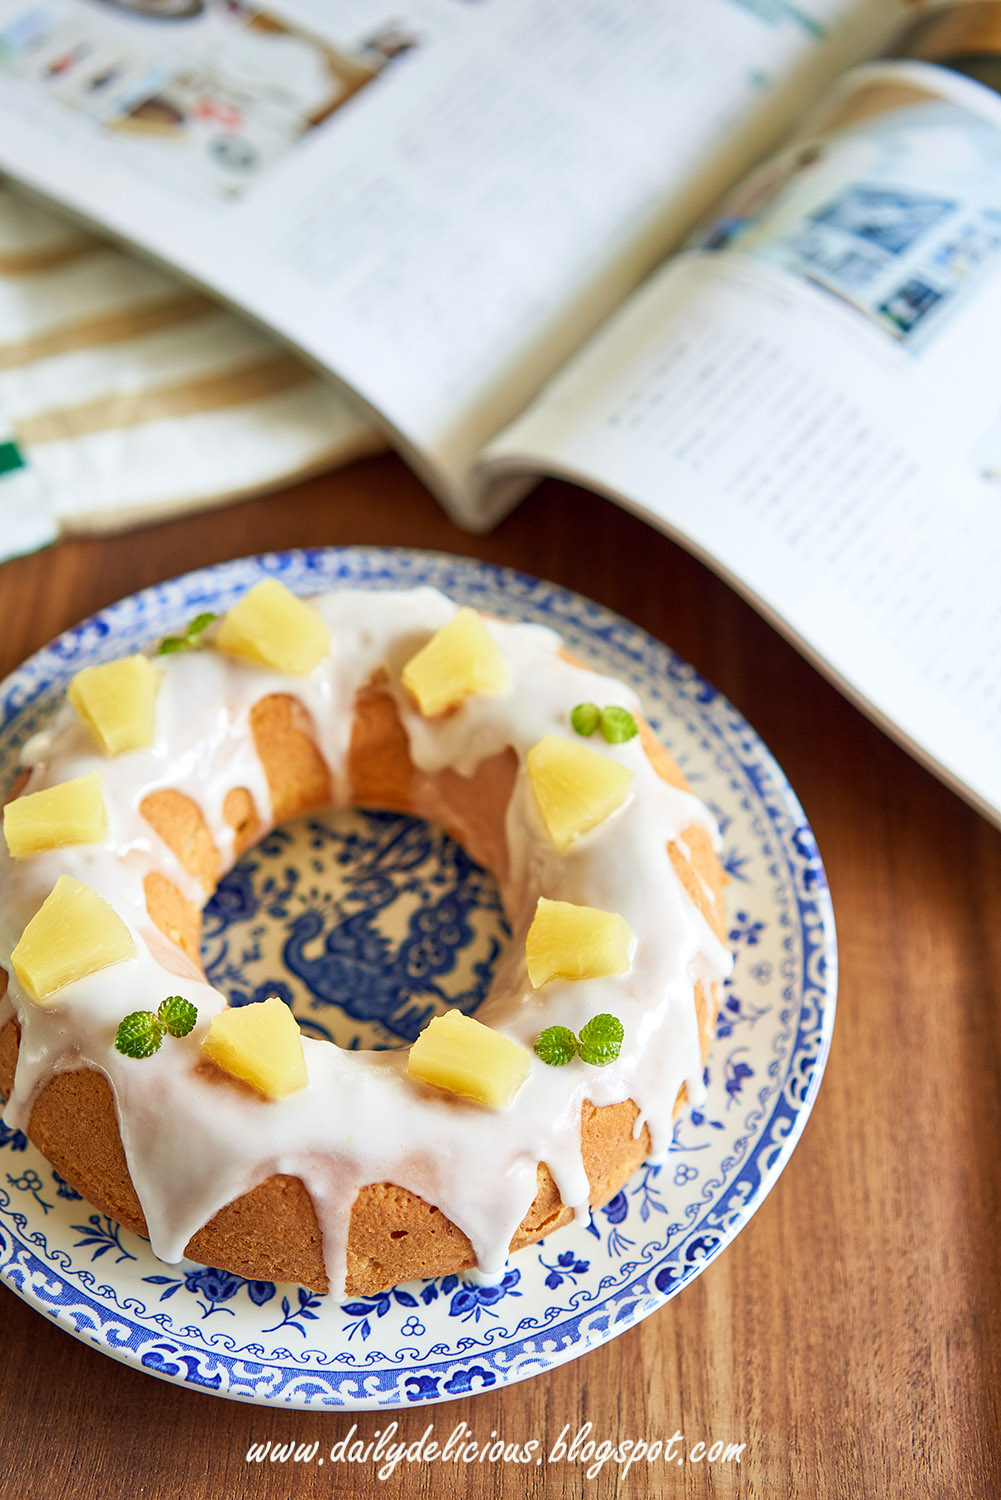 dailydelicious: Pineapple Cake